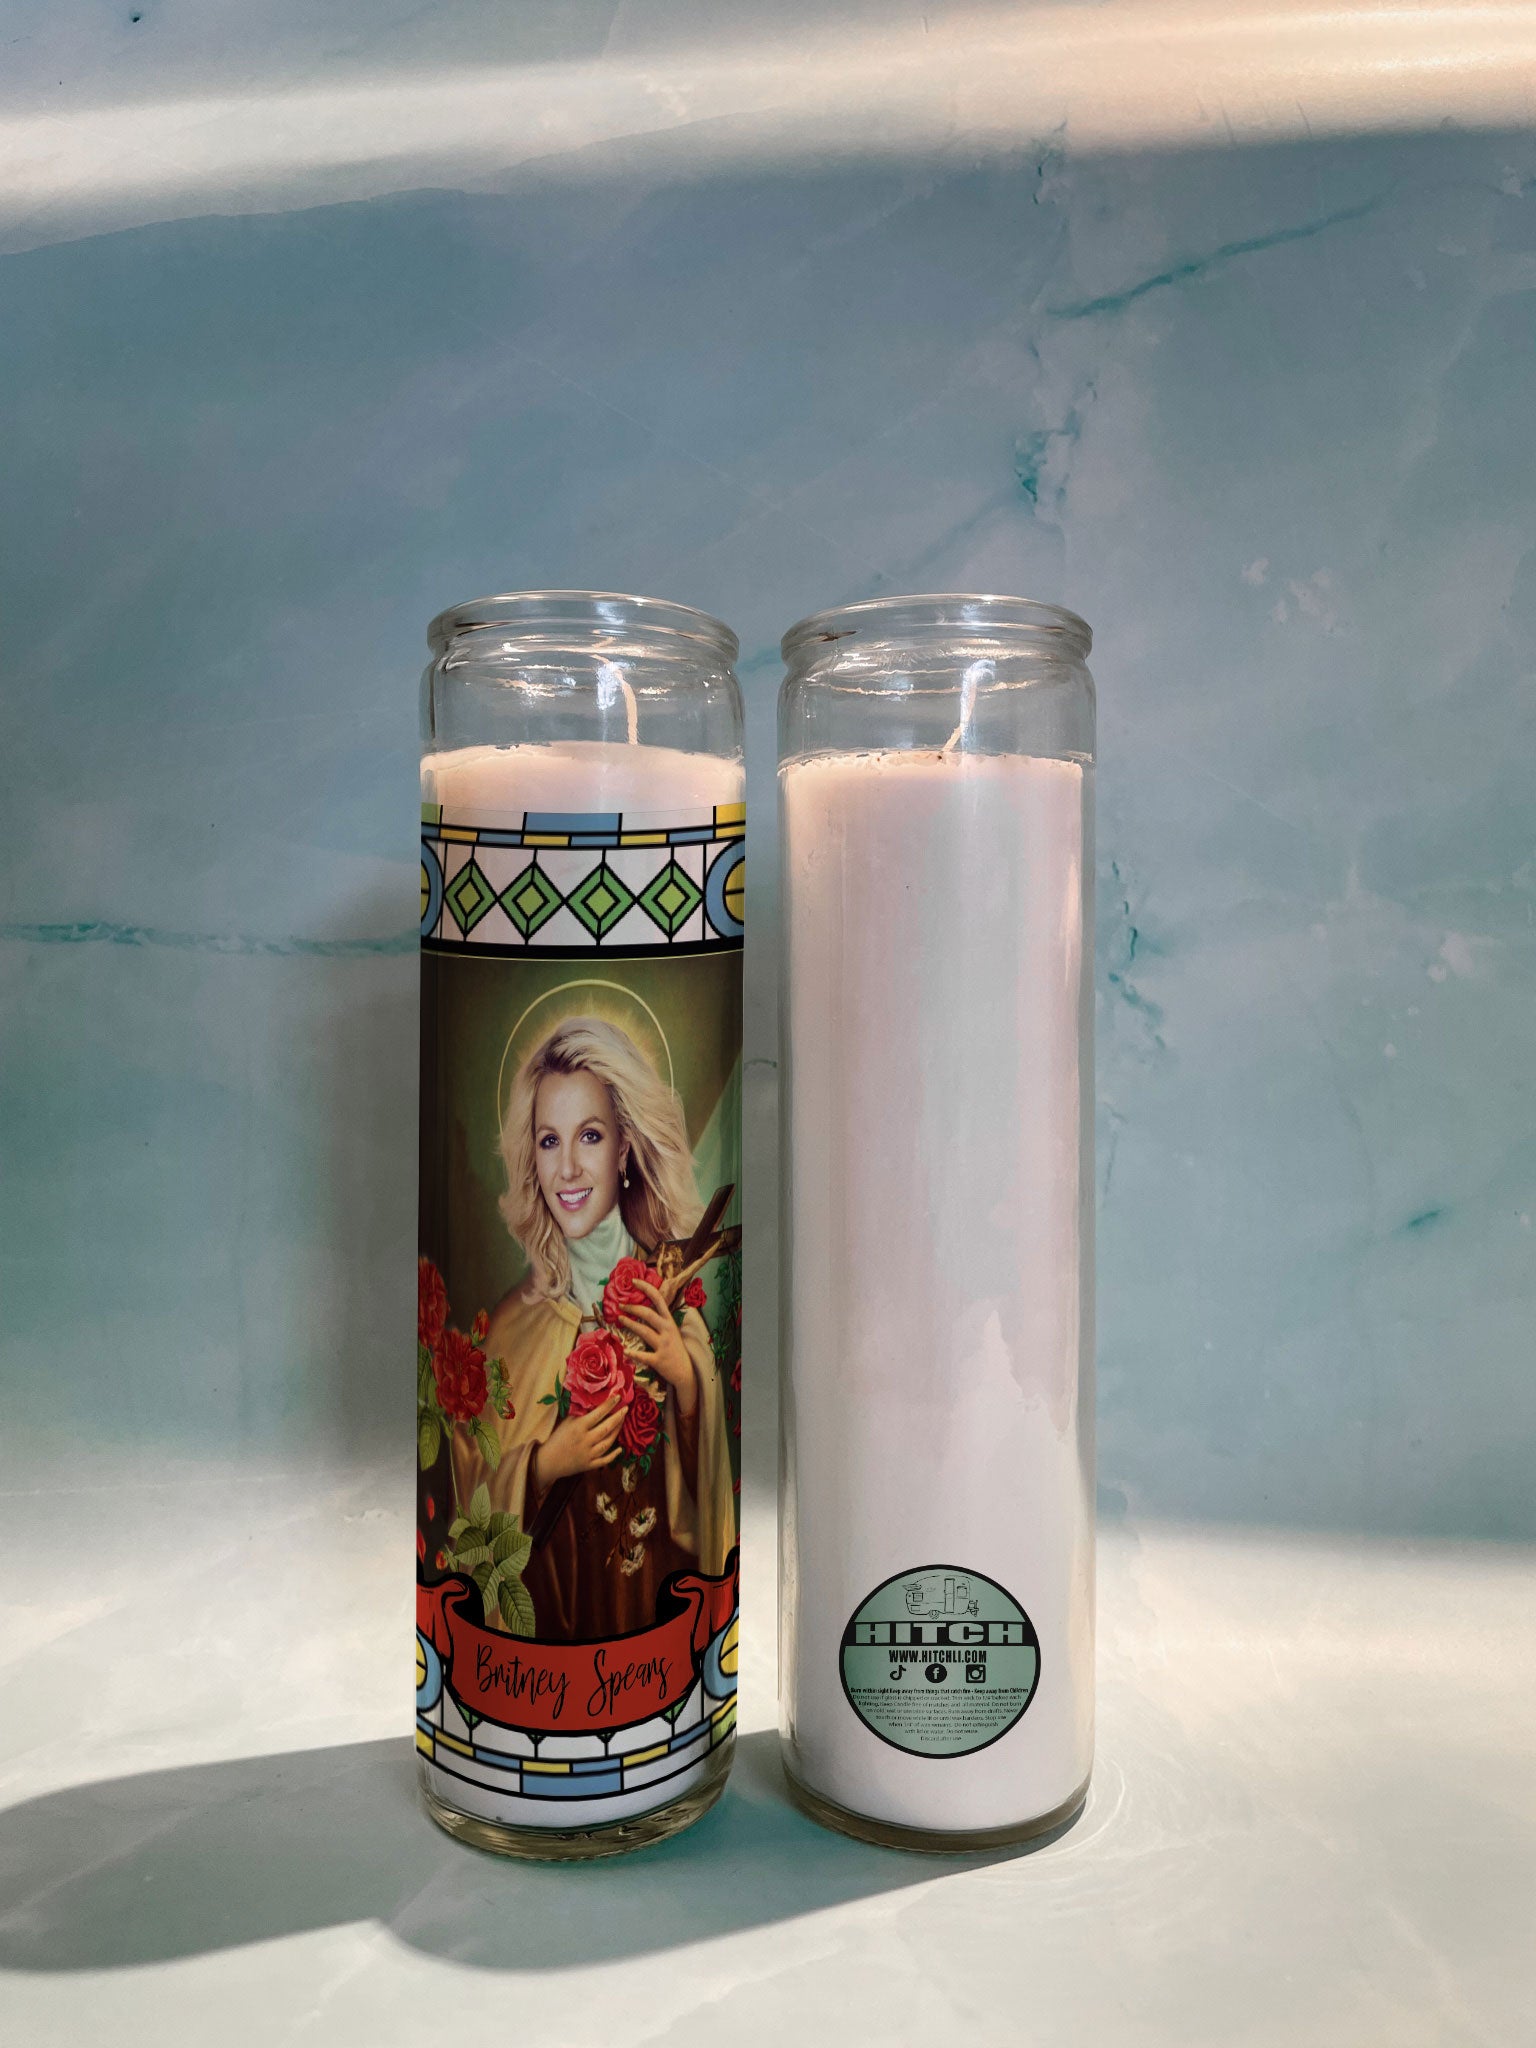 Britney Spears Original Prayer Candle.